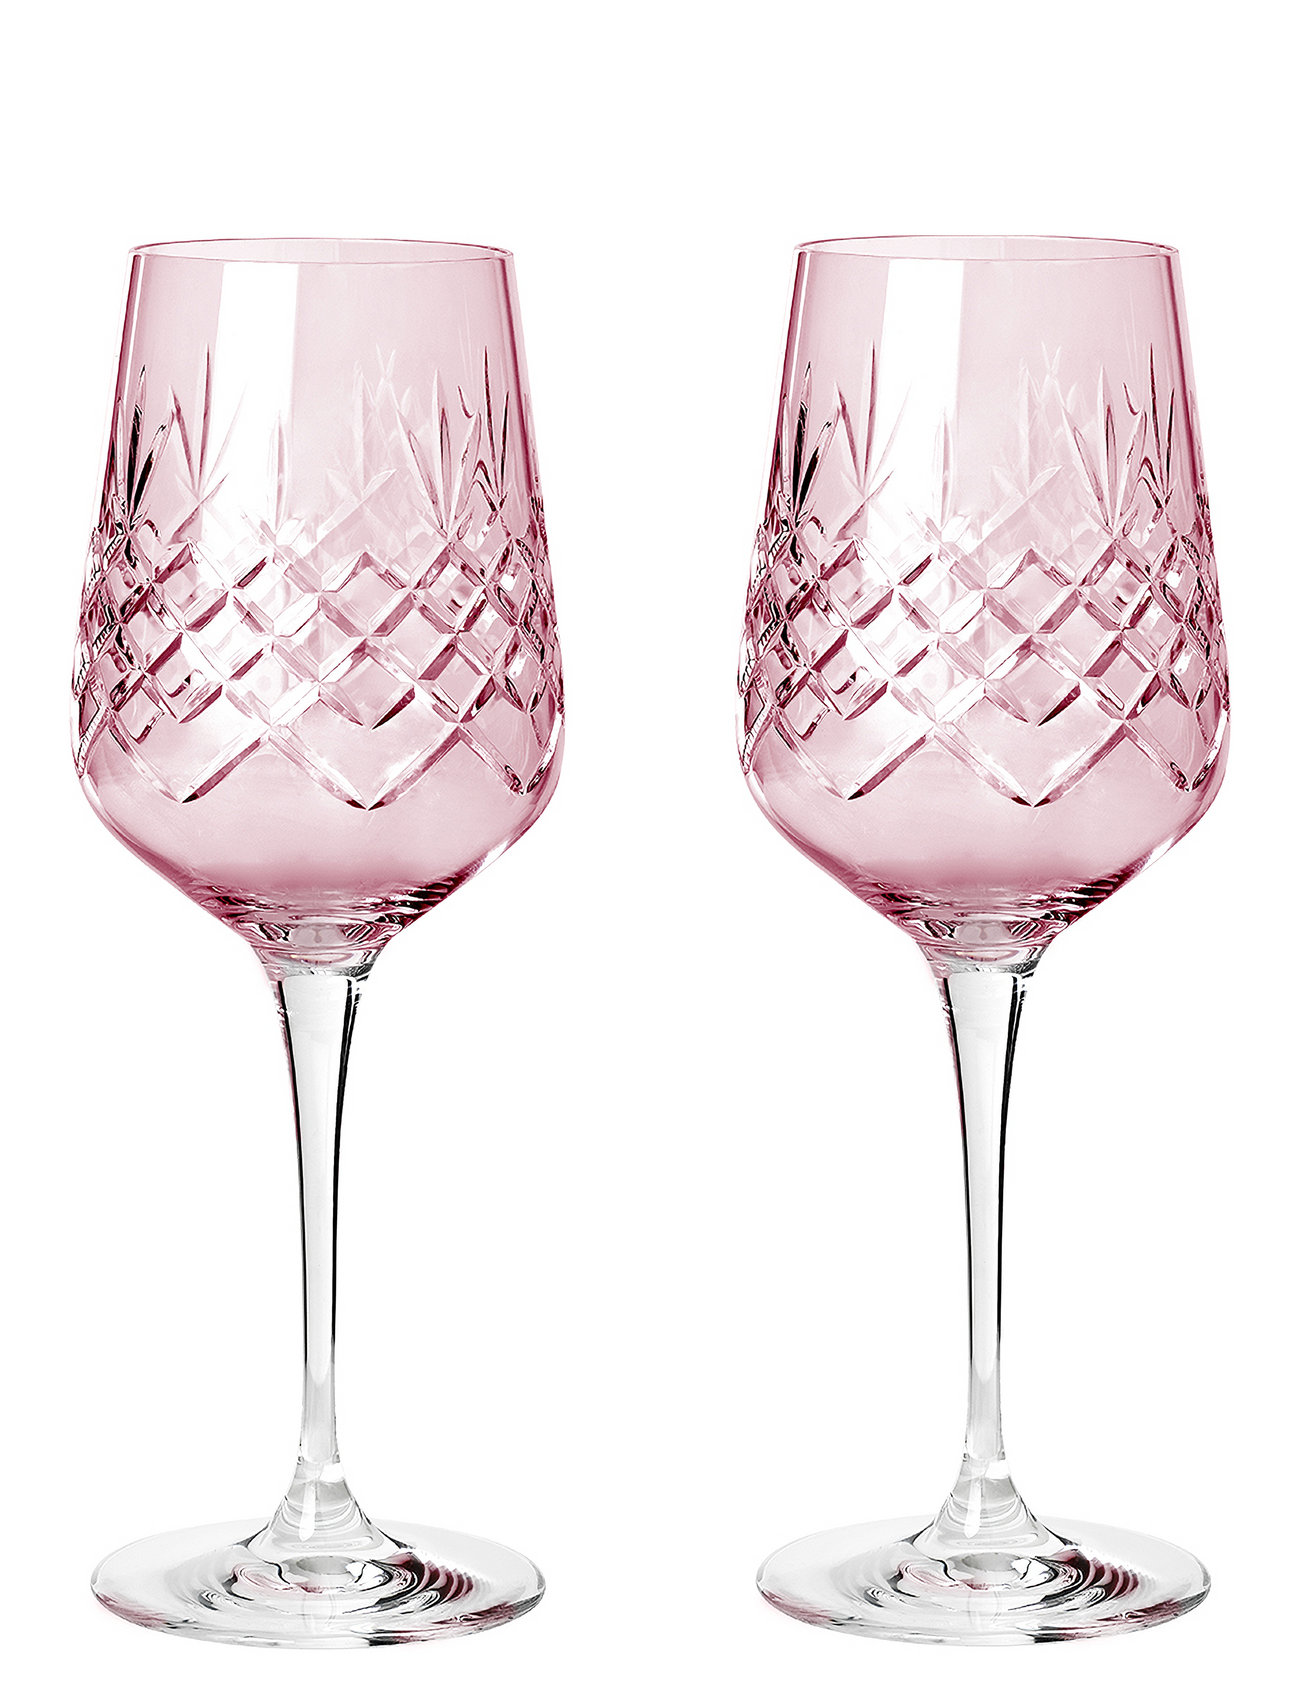 Crispy Topaz Madame - 2 Pcs Home Tableware Glass Wine Glass White Wine Glasses Pink Frederik Bagger